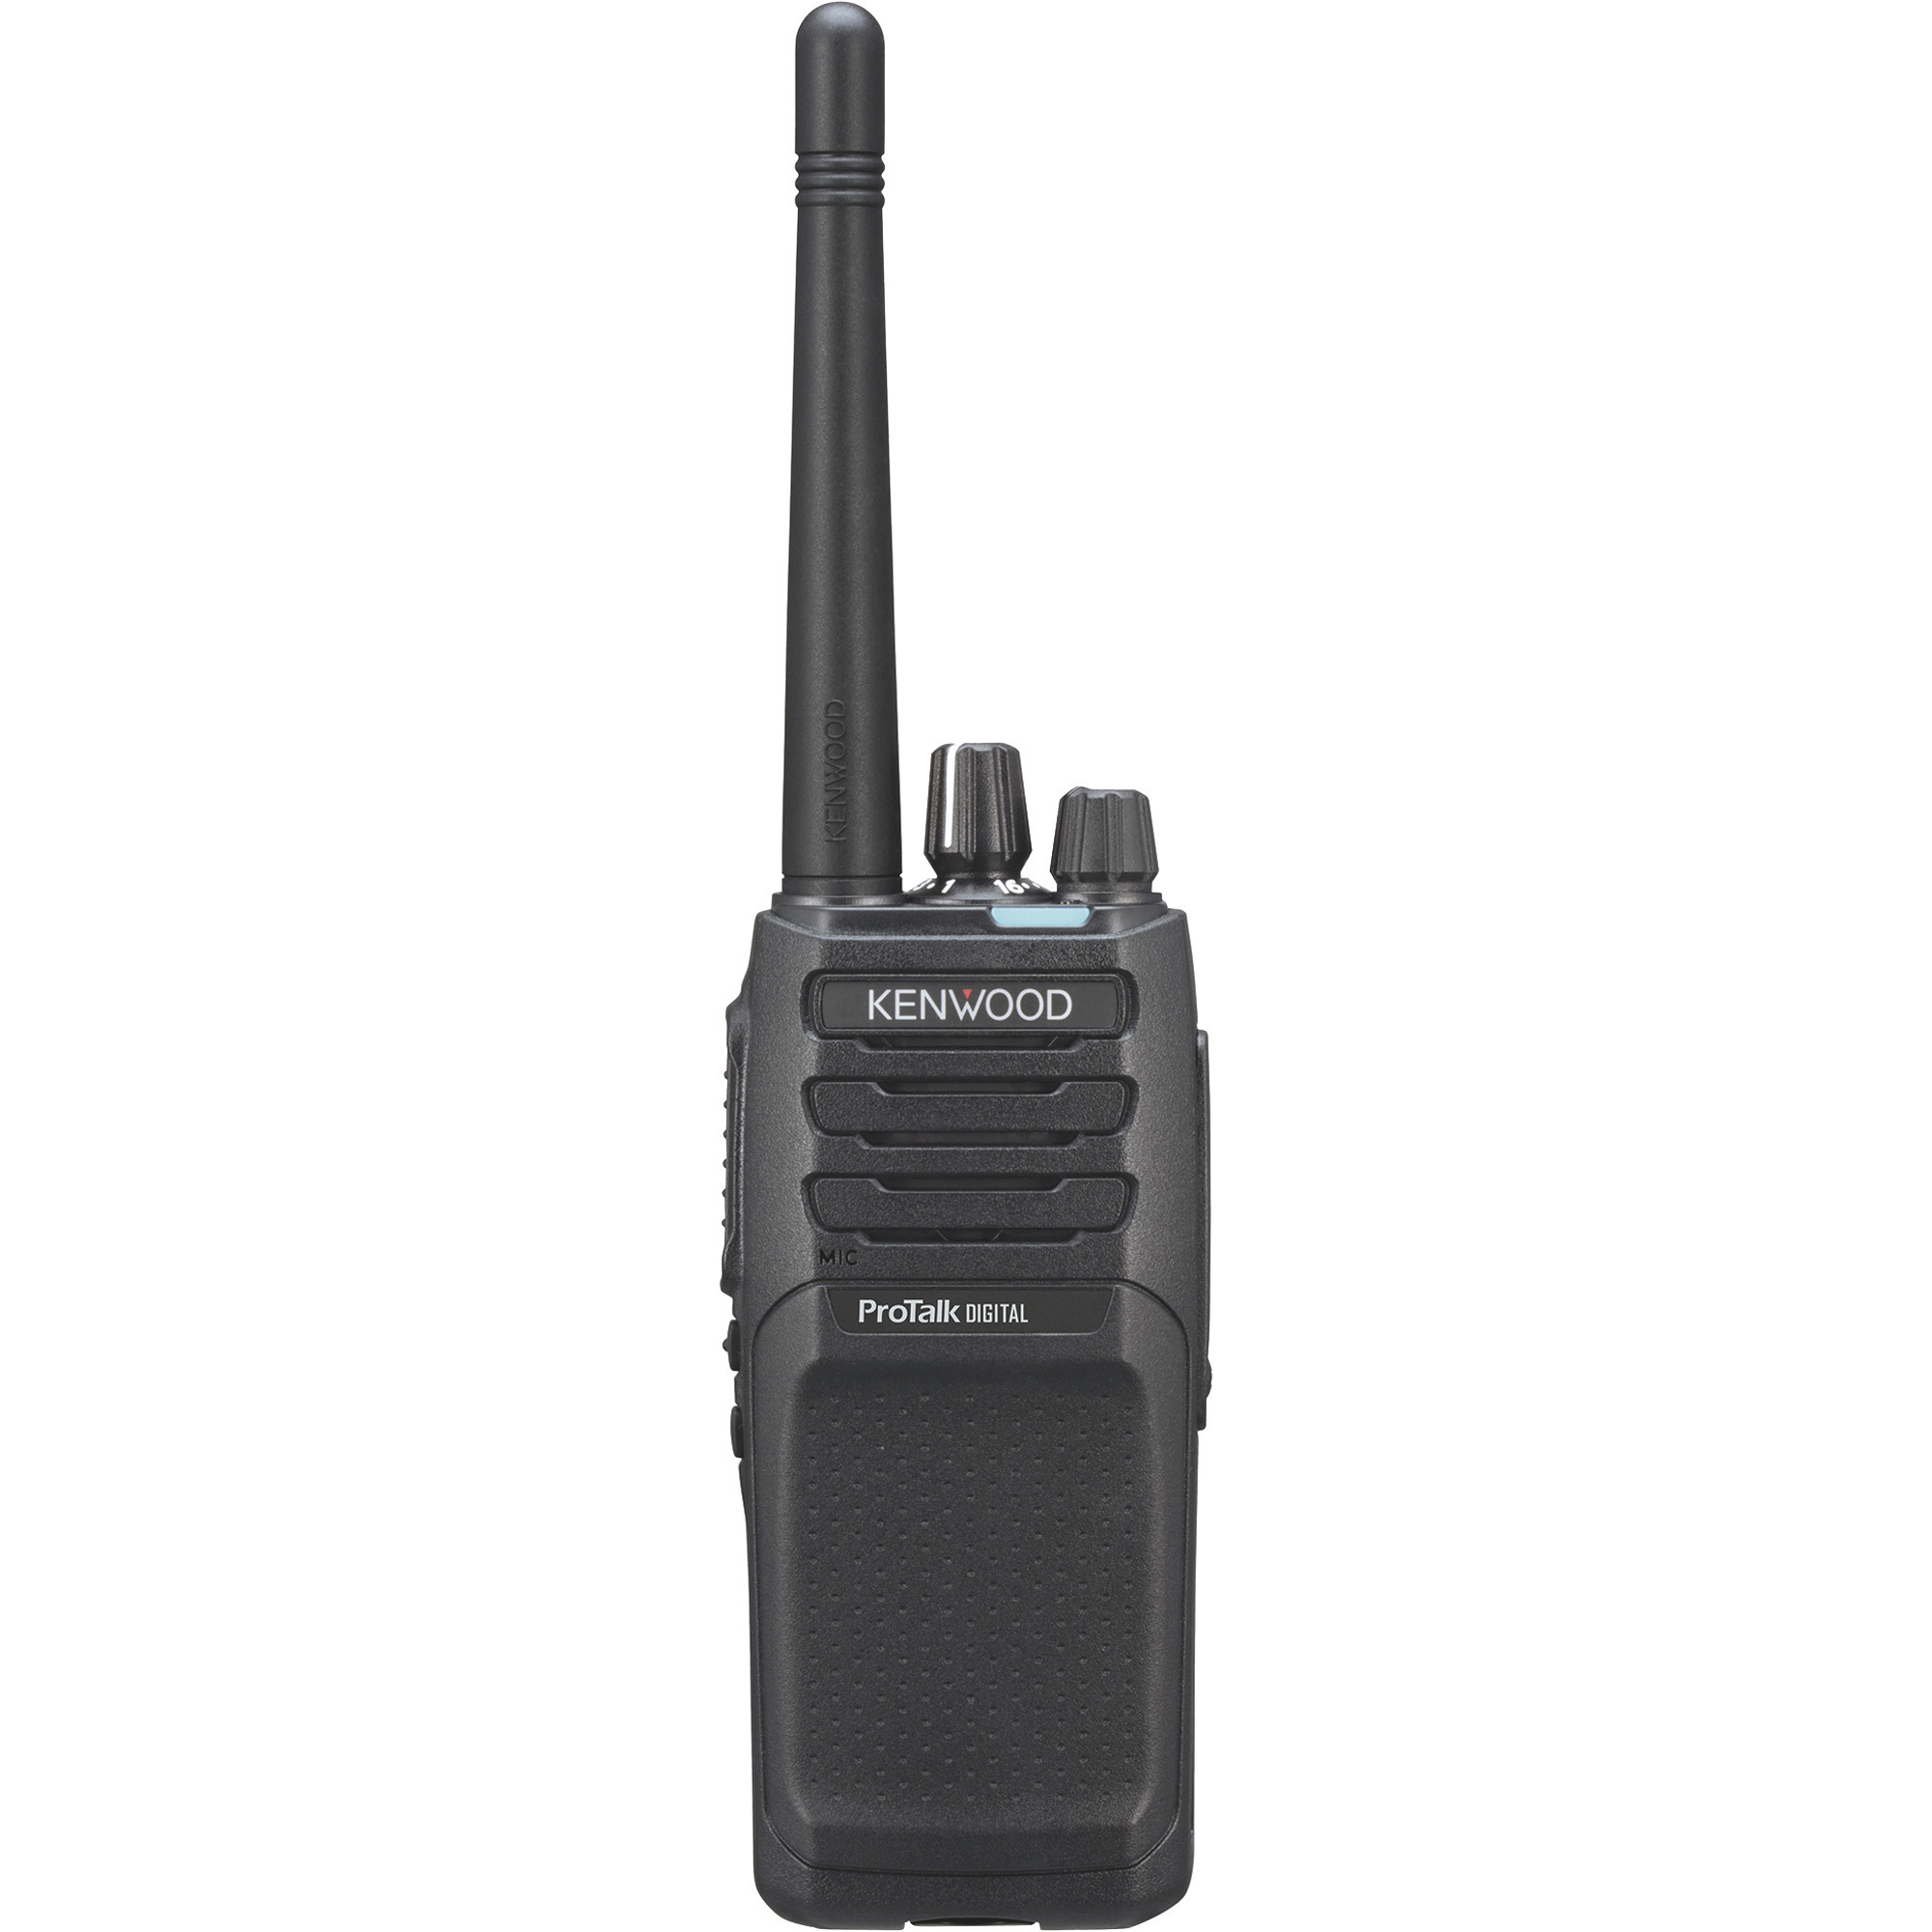 Kenwood ProTalk VHF Handheld Radio â 2 Watts, 64 Channels, Model NX-P1202AVK